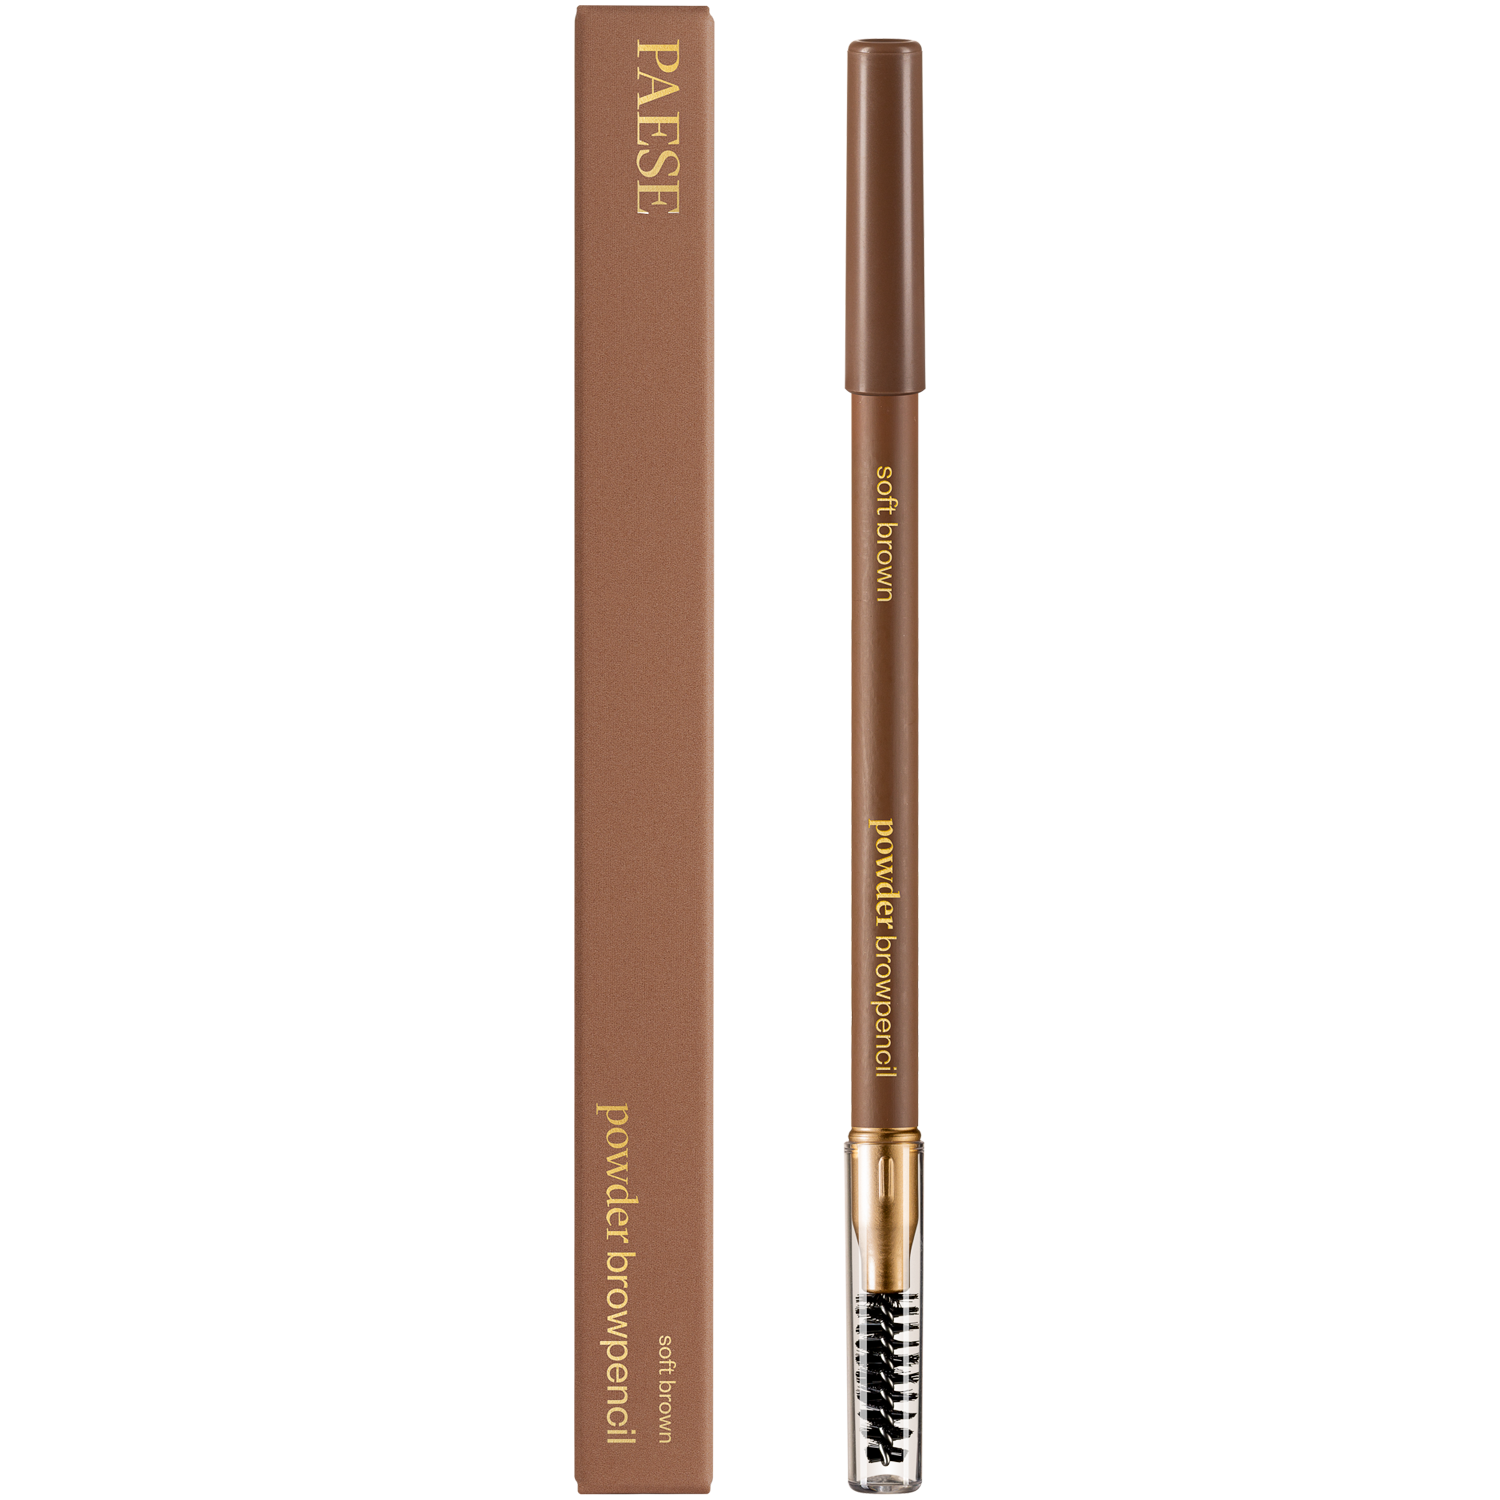 Мягкий коричневый карандаш для бровей Paese Powder Brow Pencil, 1,19 гр